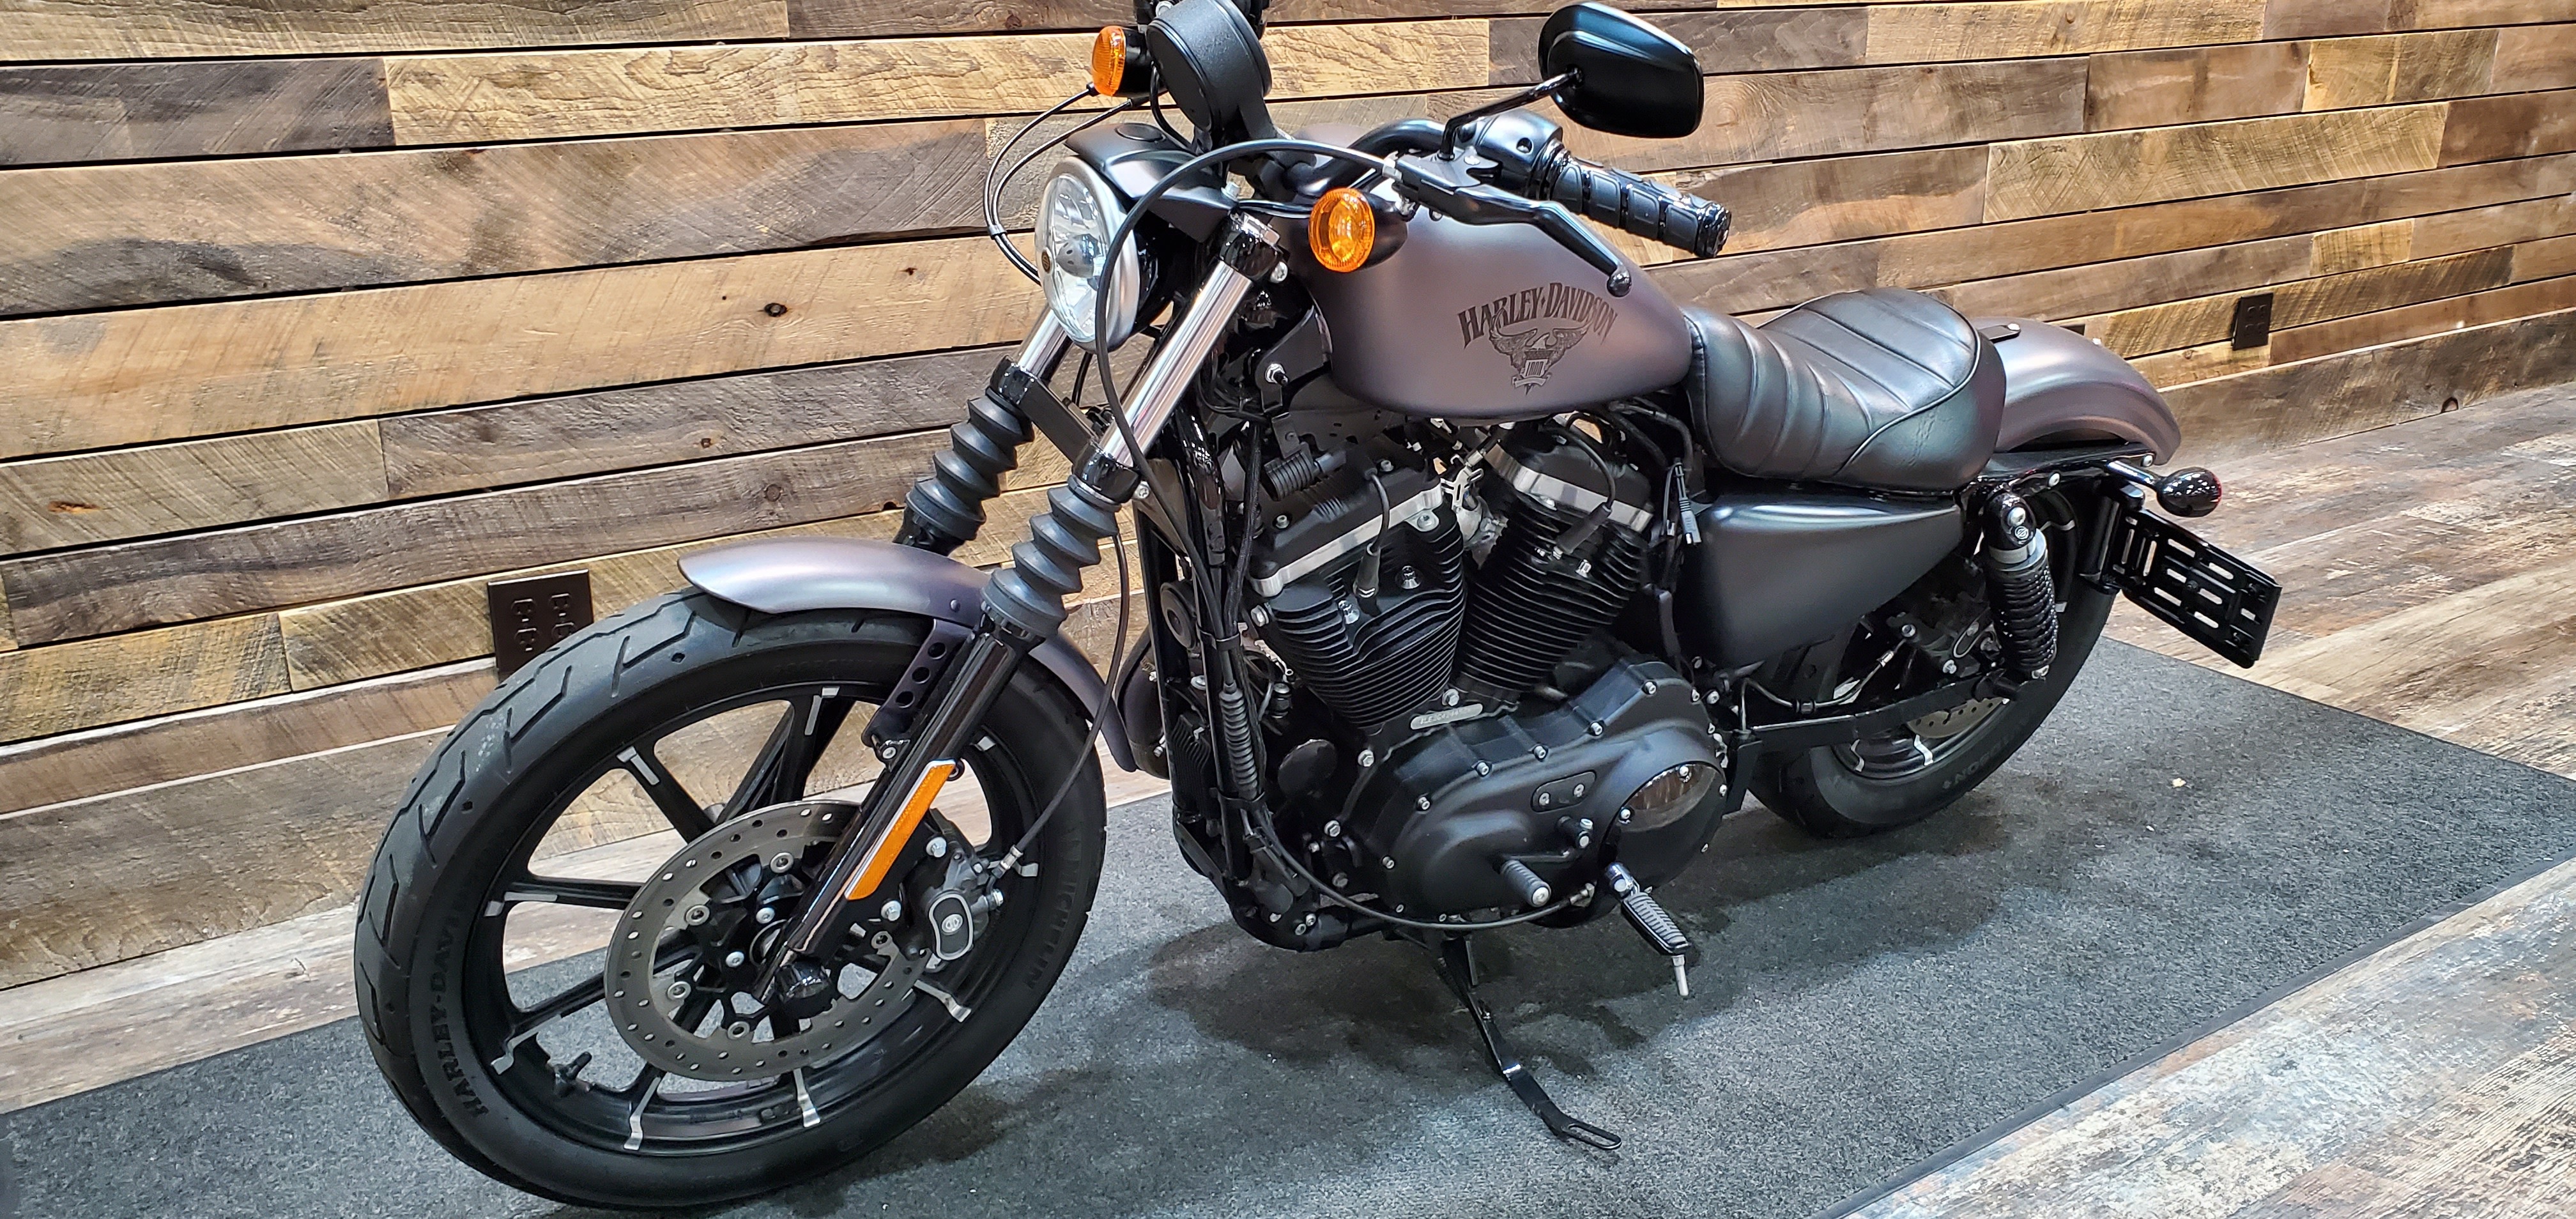 2016 Harley-Davidson Sportster Iron 883 at Bull Falls Harley-Davidson